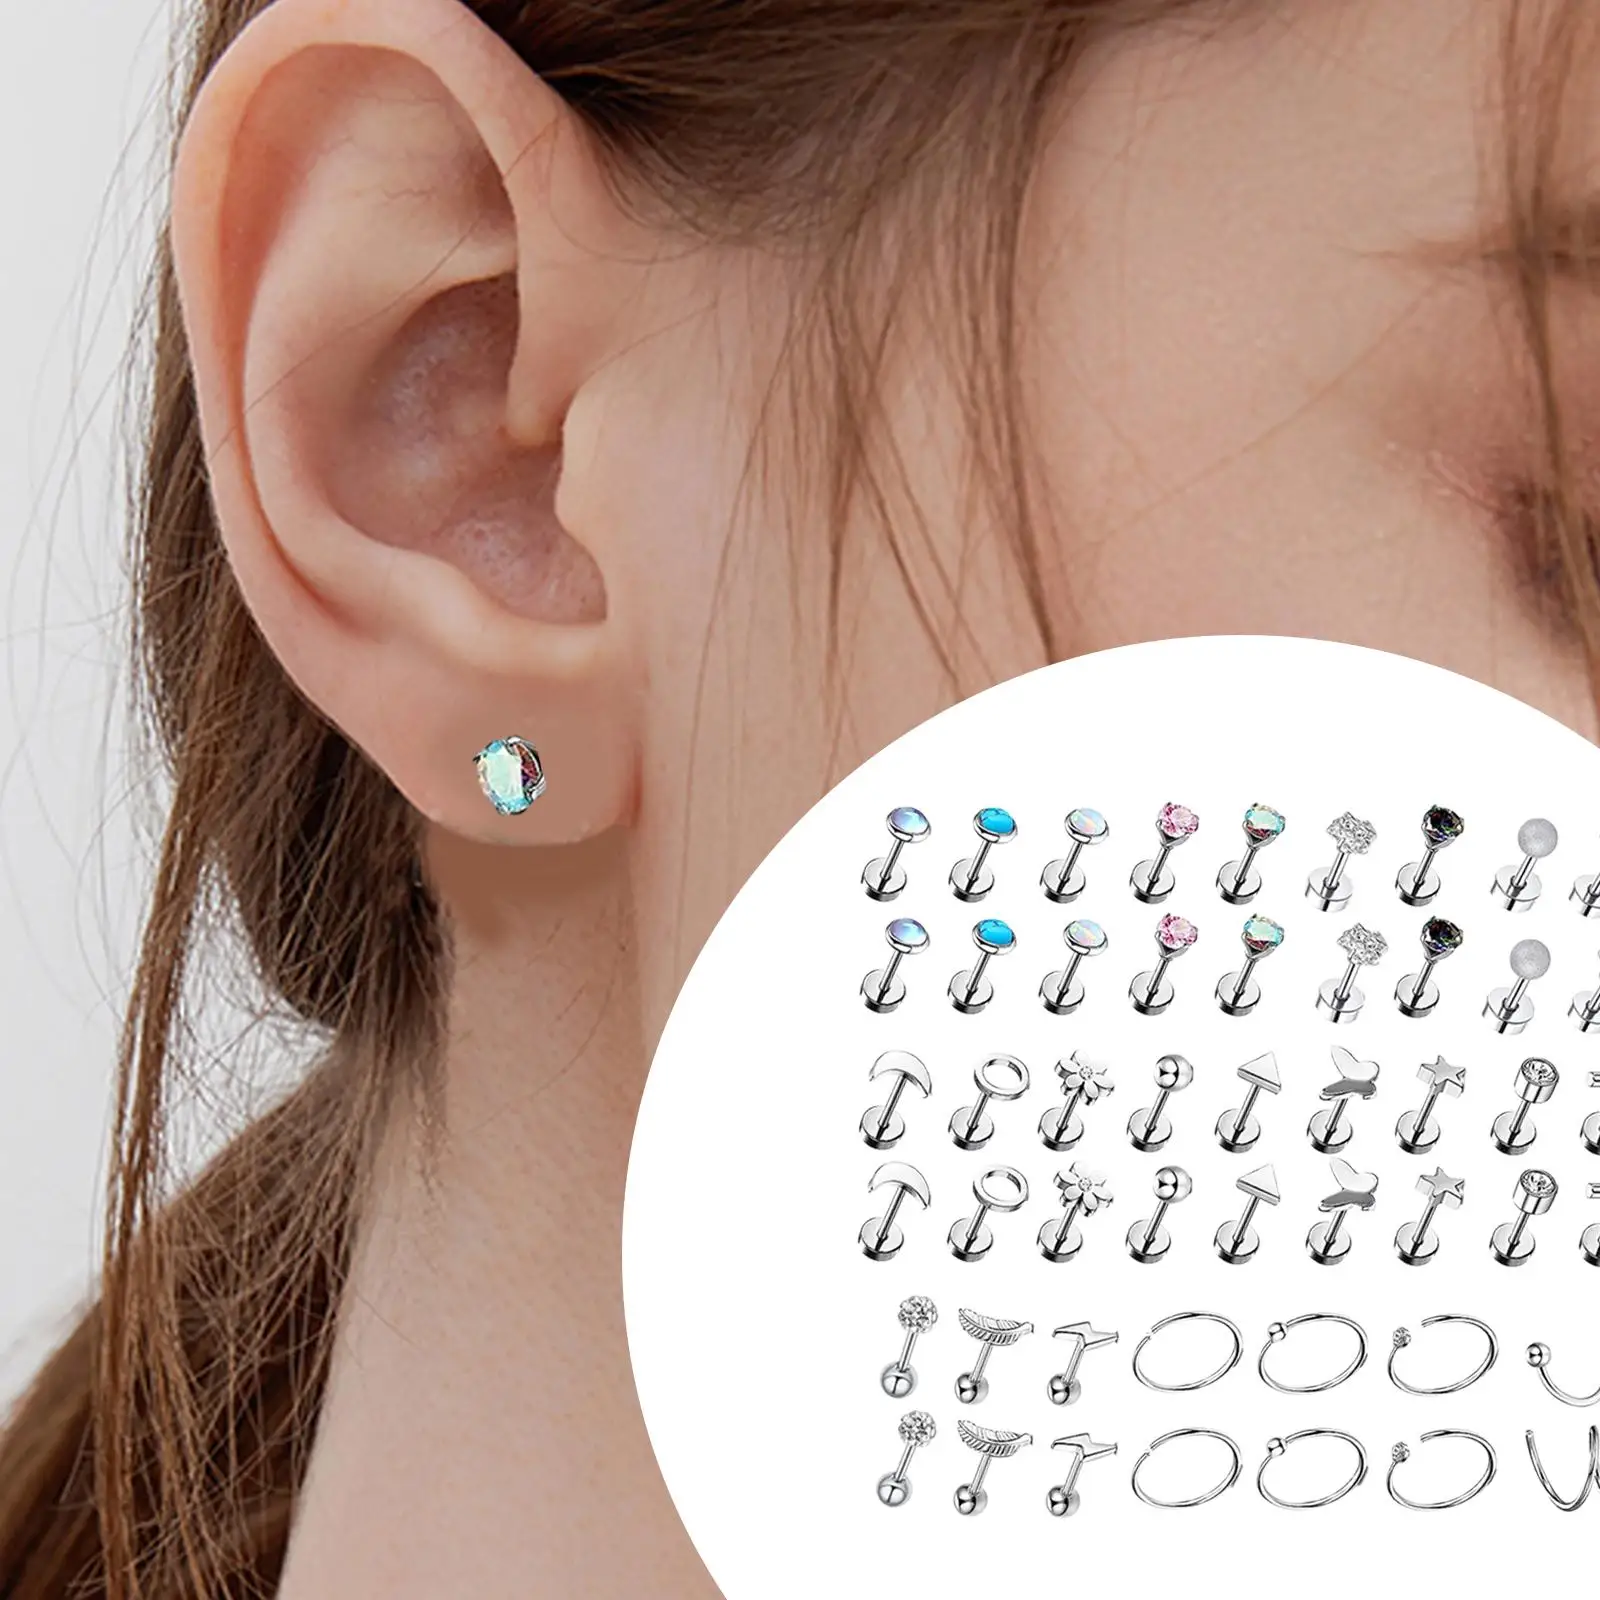 25 Pairs Stainless Steel Stud Earrings Set for Women Men Moon Star Flower Leaf Heart Cartilage Earrings Piercing Jewelry